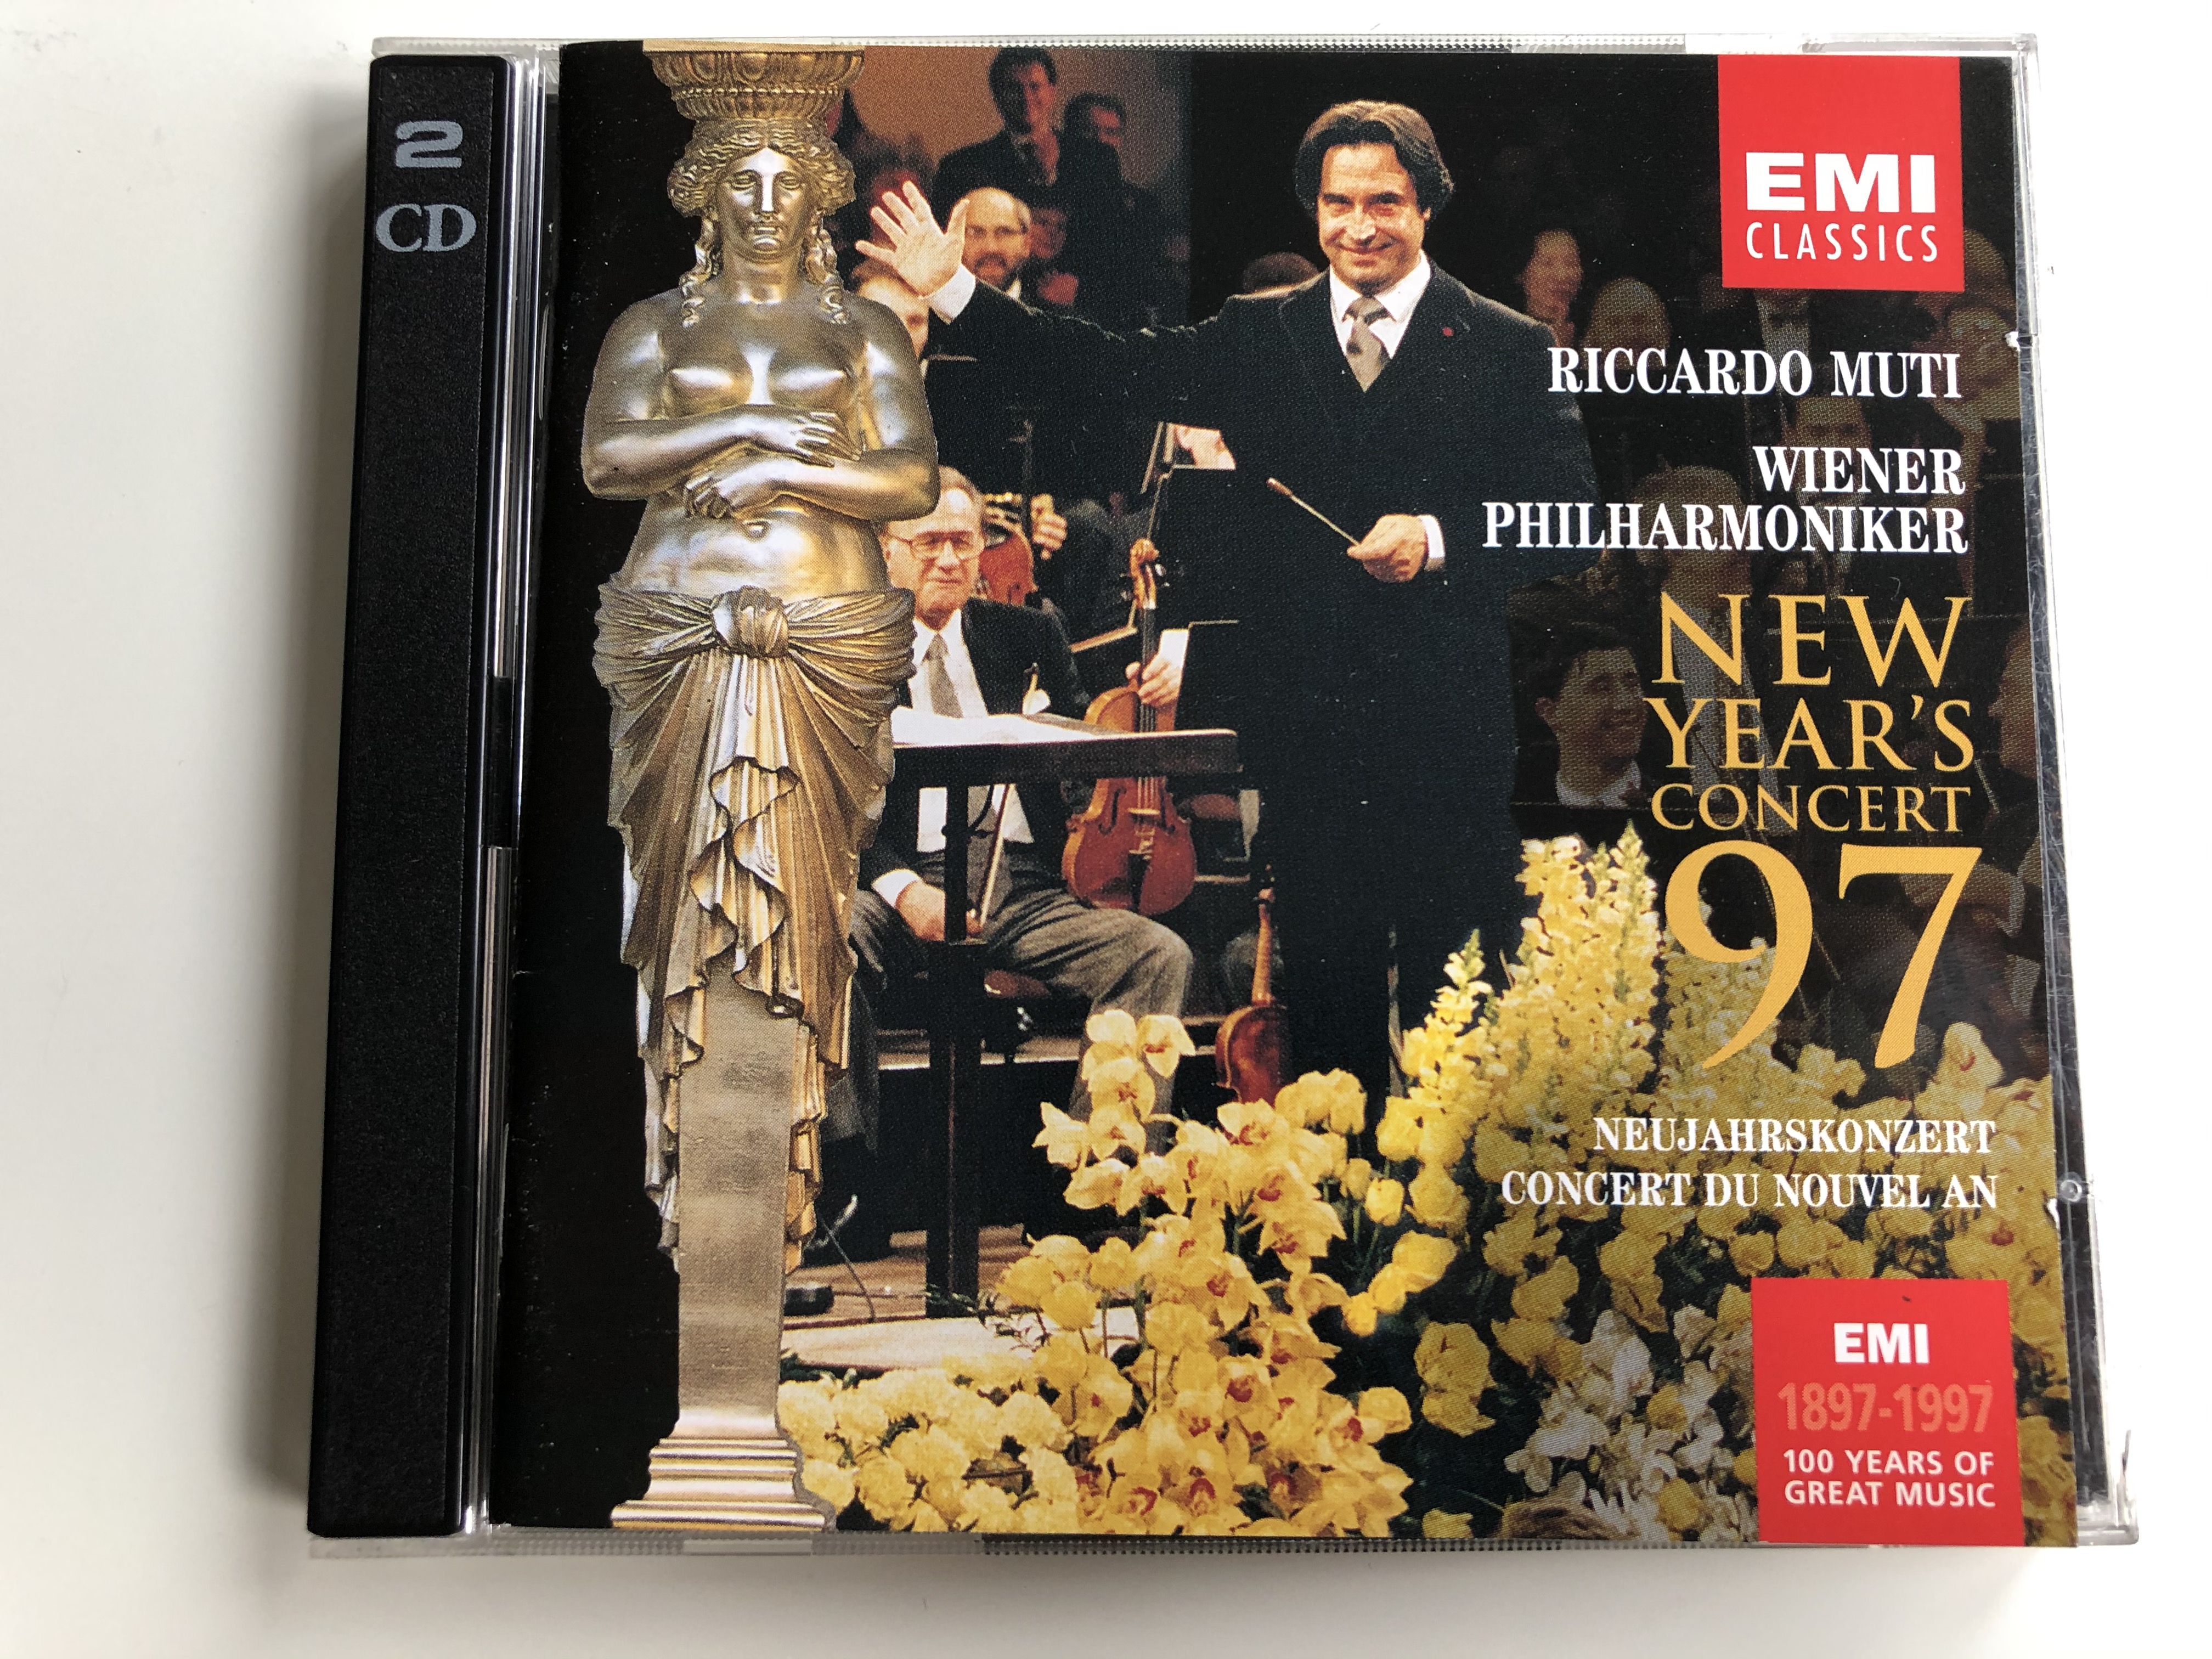 riccardo-muti-wiener-philharmoniker-new-year-s-concert-97-neujahrskonzert-concert-du-nouvel-an-emi-1897-1997-100-years-of-great-music-emi-classics-2x-audio-cd-1997-stereo-7243-5-56336-2-0-1-.jpg